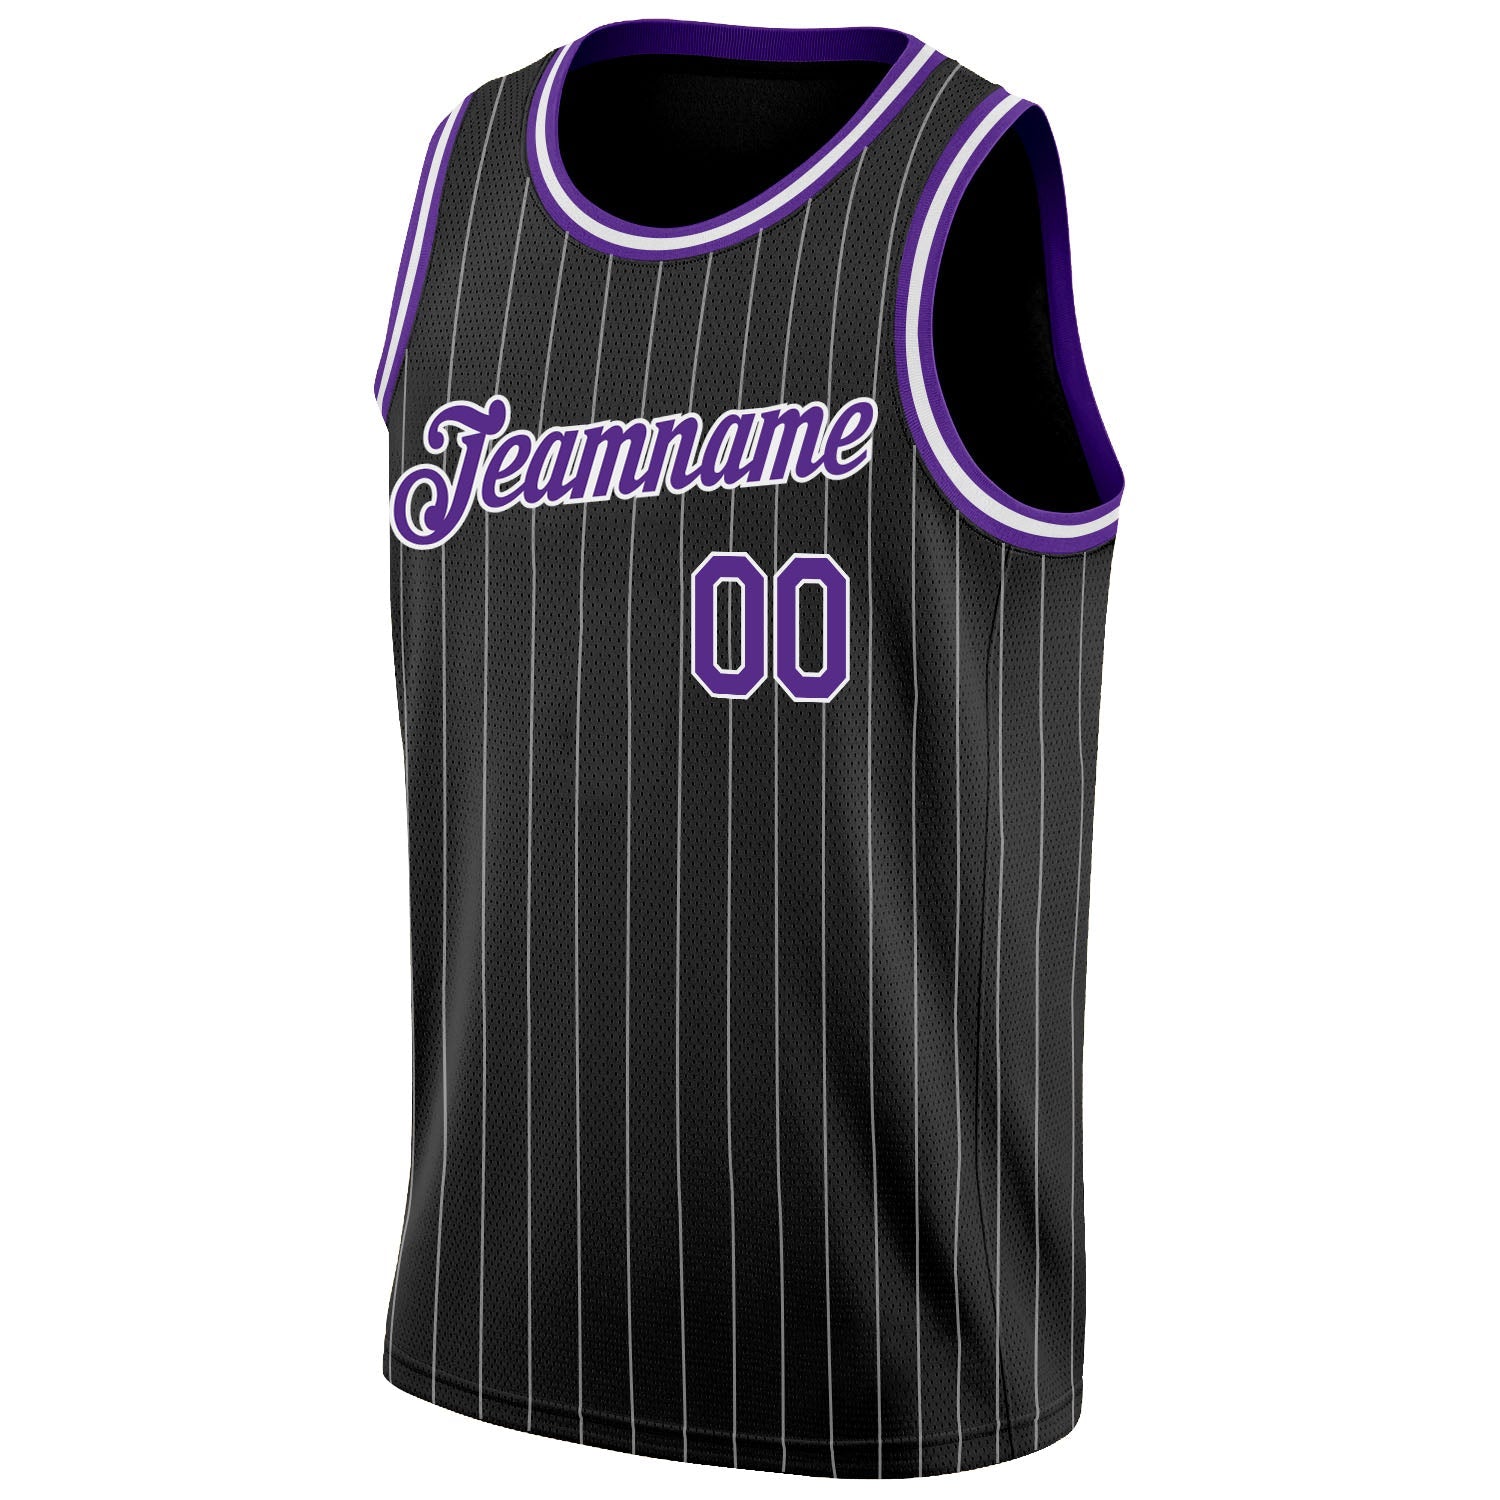 Custom Black White Pinstripe Purple-White Authentic Basketball Jersey